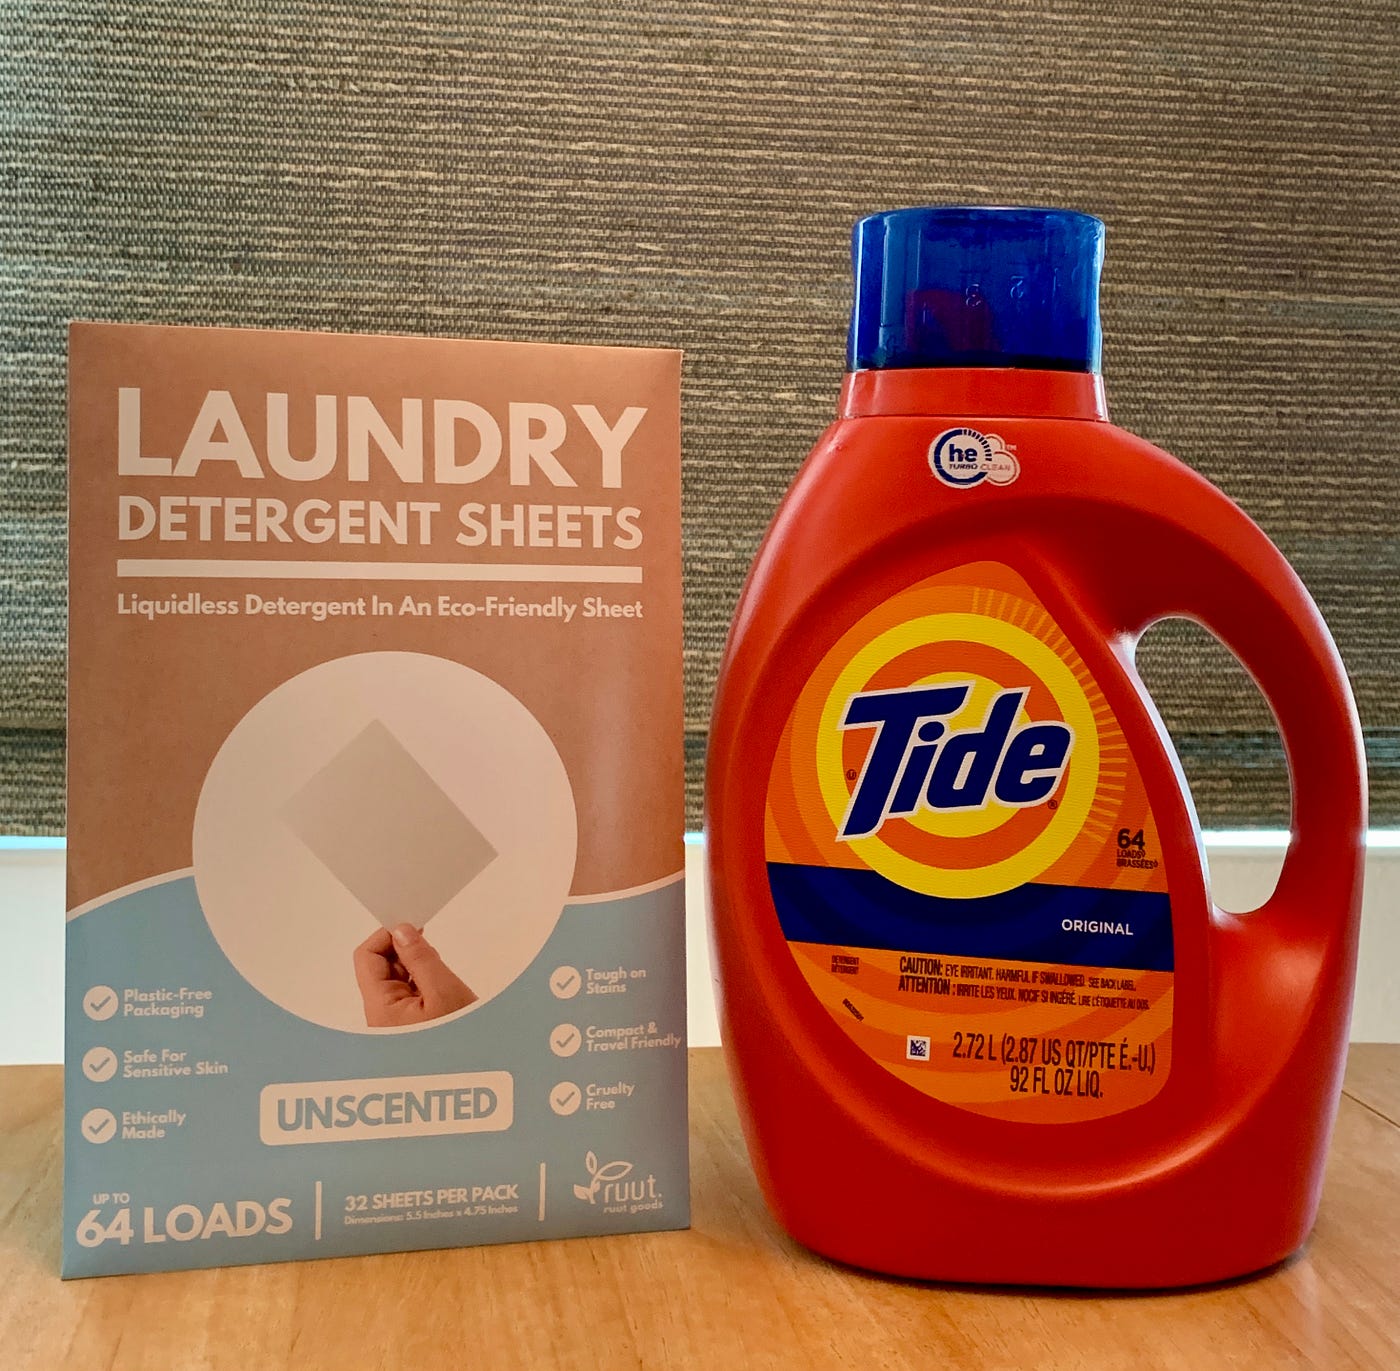 Ruut Laundry Detergent Sheets